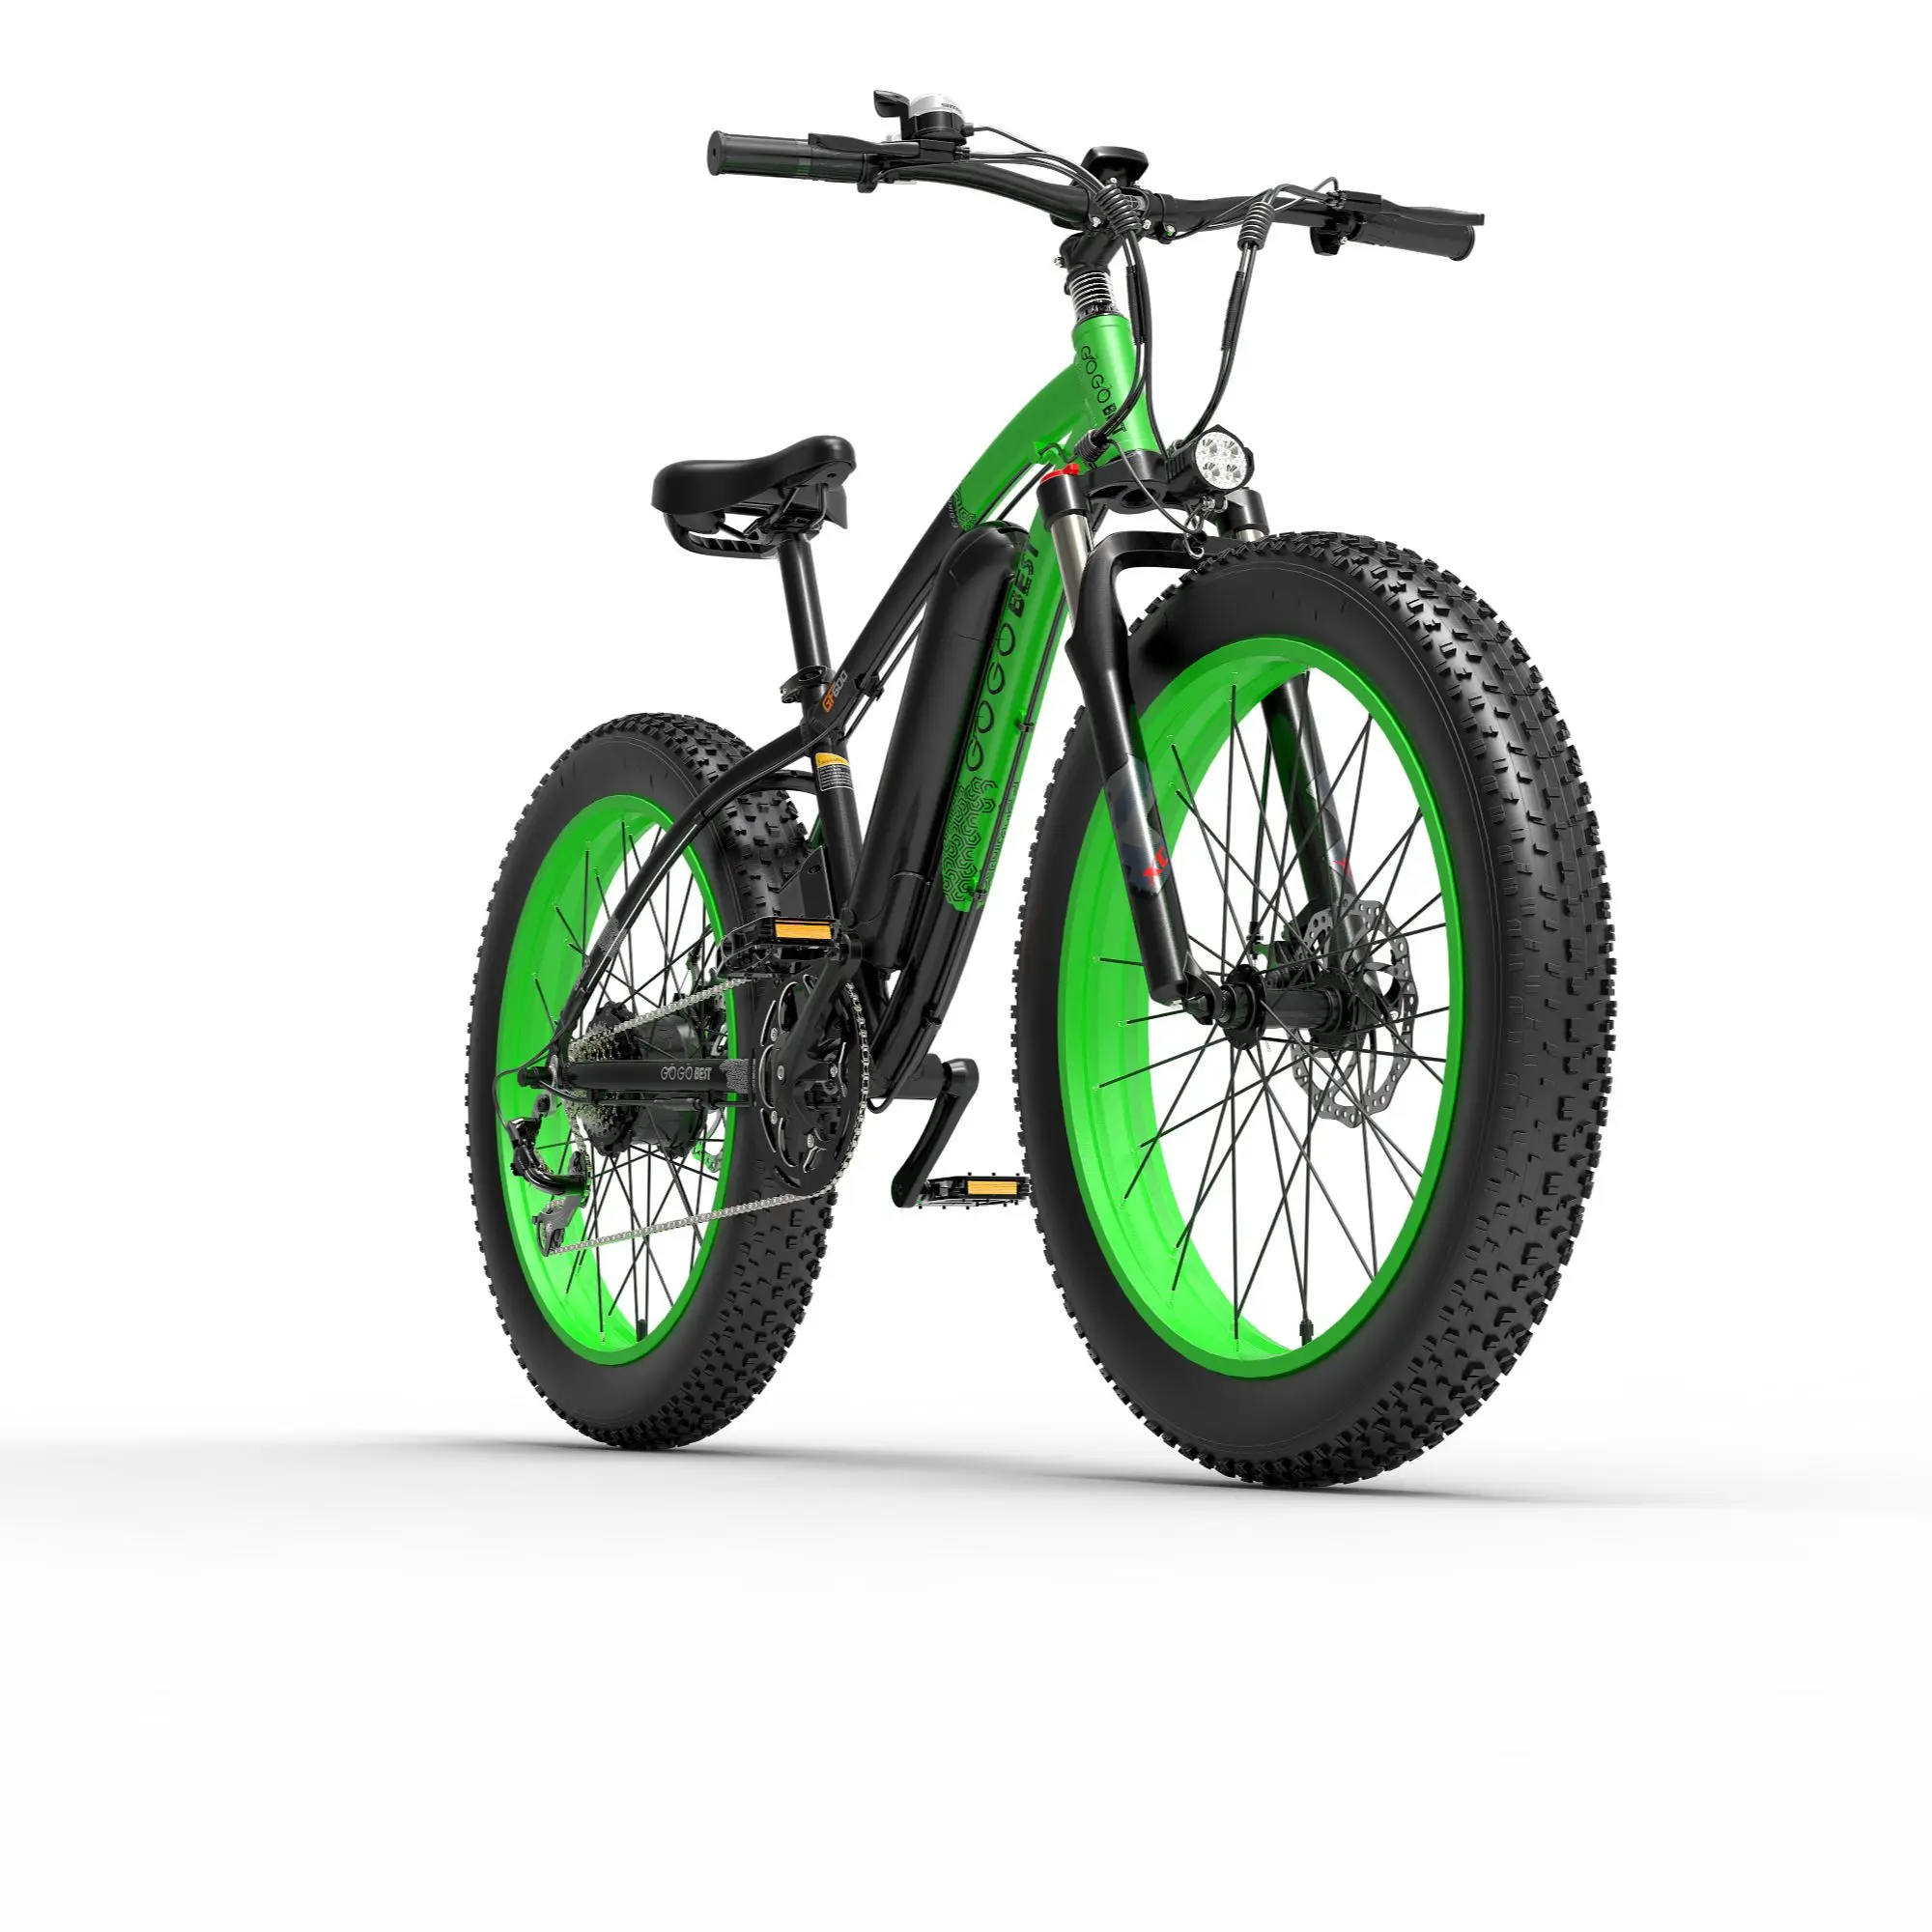 GOGOBEST-GF600 Adults Electric Bicycle Spoke wheel 48V13AH 1000W brushless motor, 26*4.0 "tires, 3 riding modes